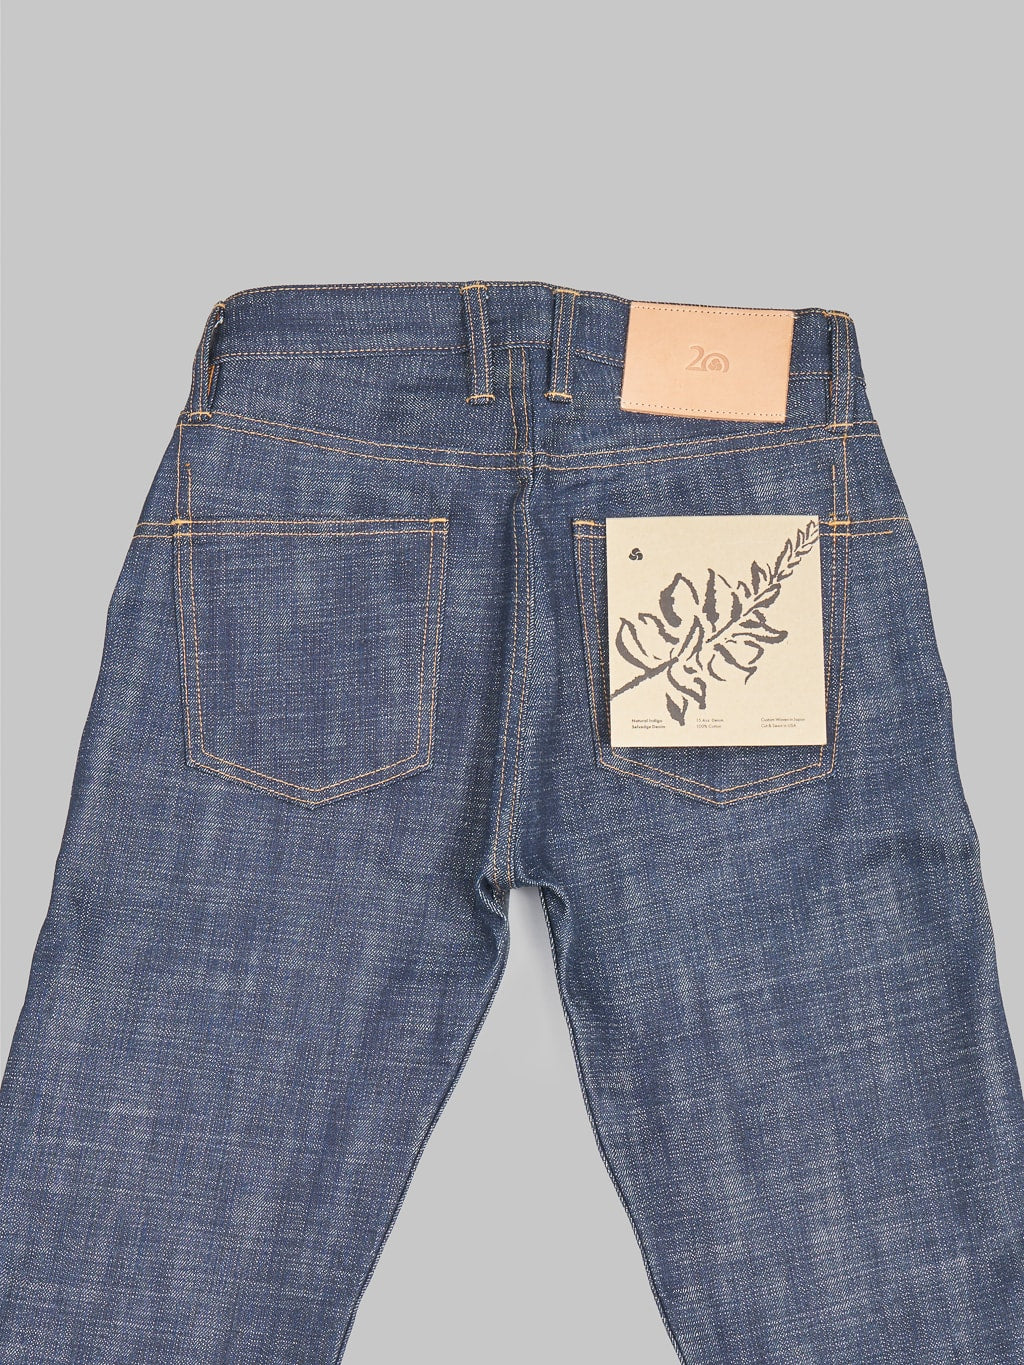 3sixteen CT 102xn 20th Anniversary Natural Indigo Jeans back pockets